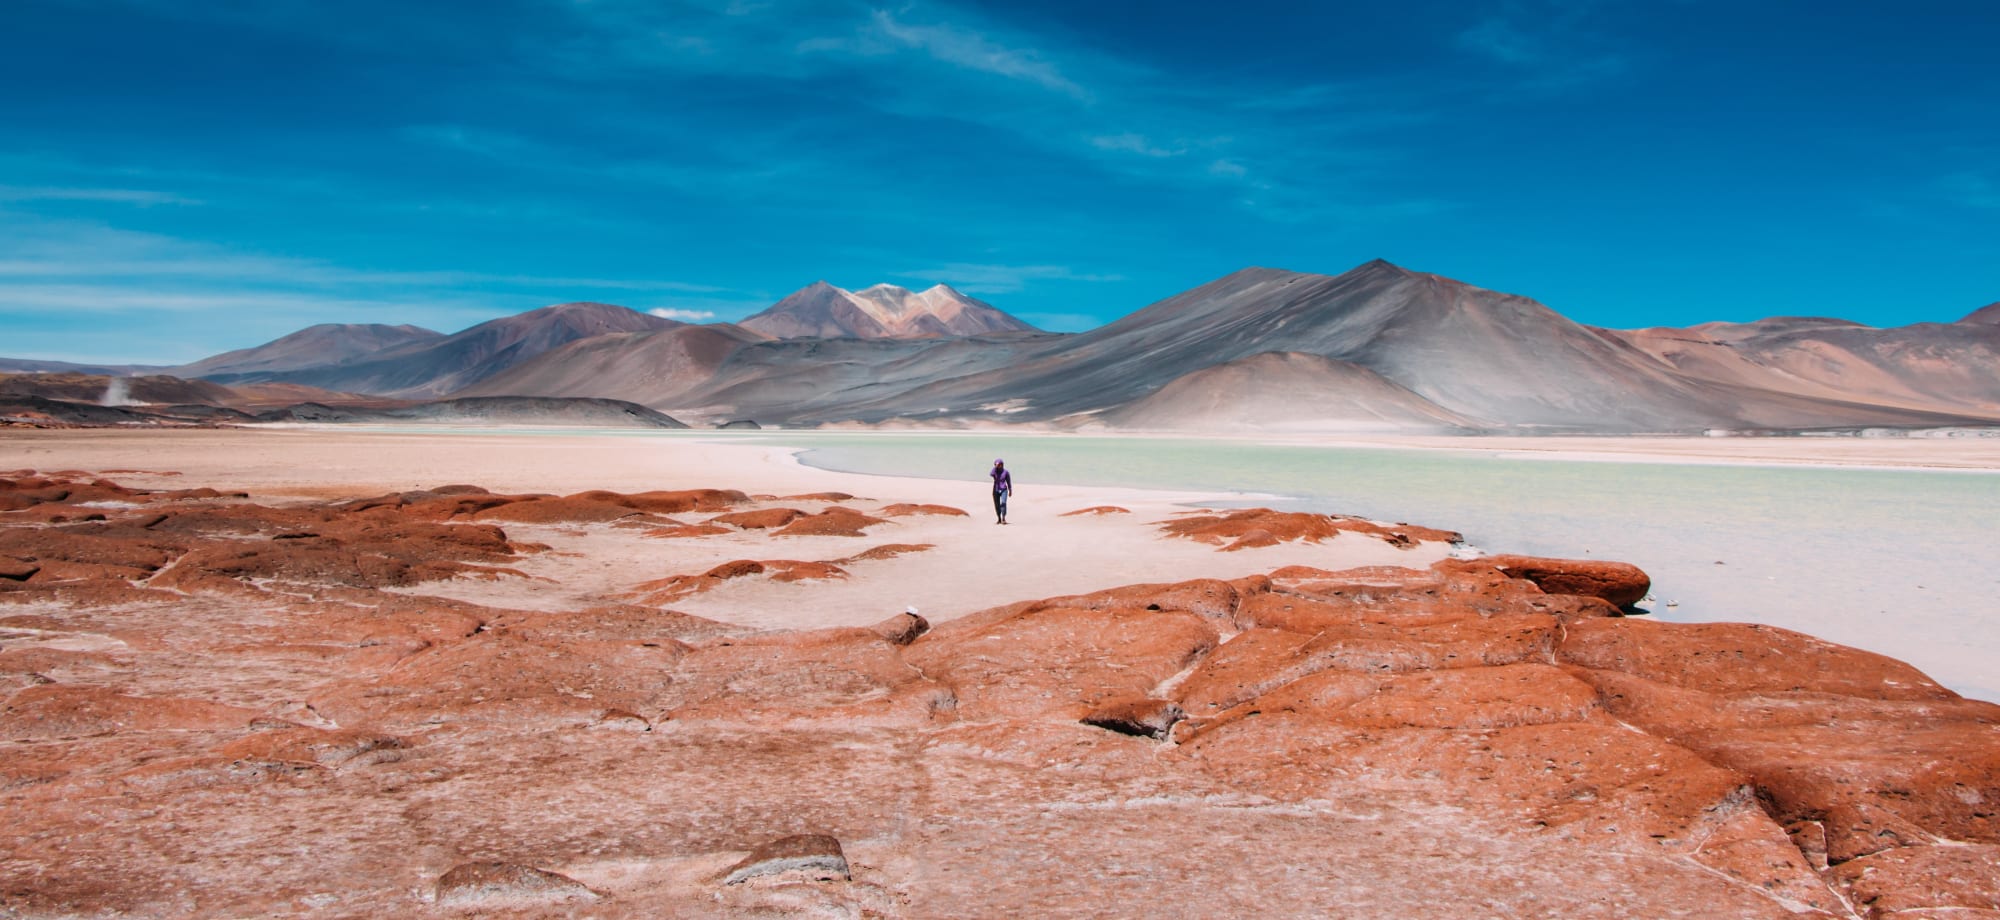 A man is walking in the Atacama Desert in Chile.